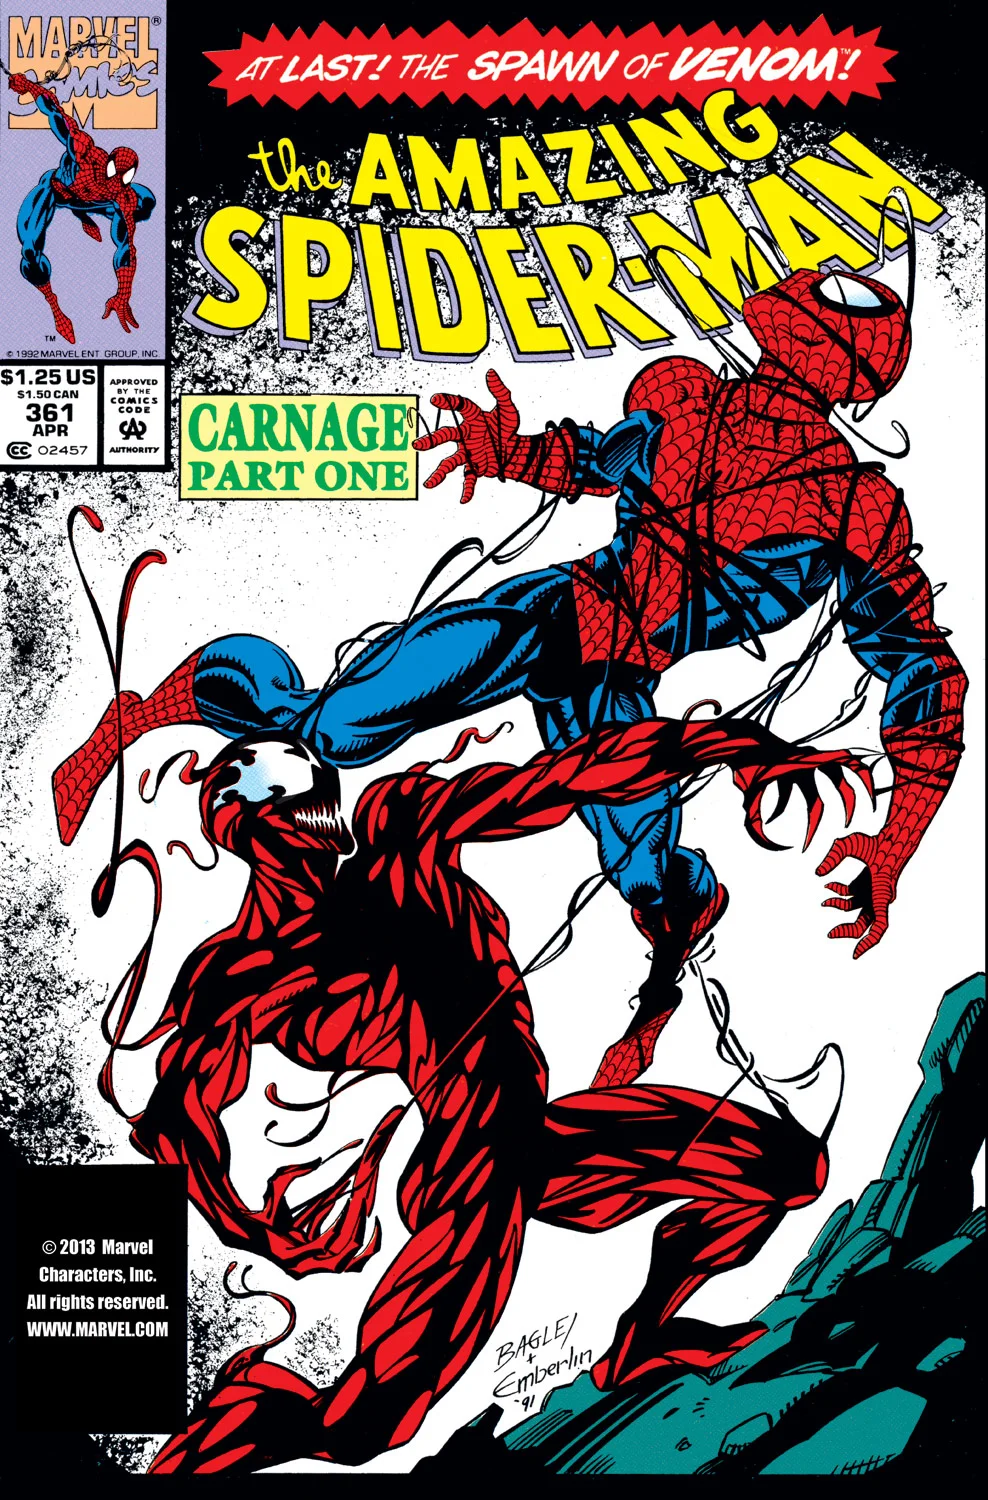 История Карнажа — самого безумного врага Человека-паука - фото 1